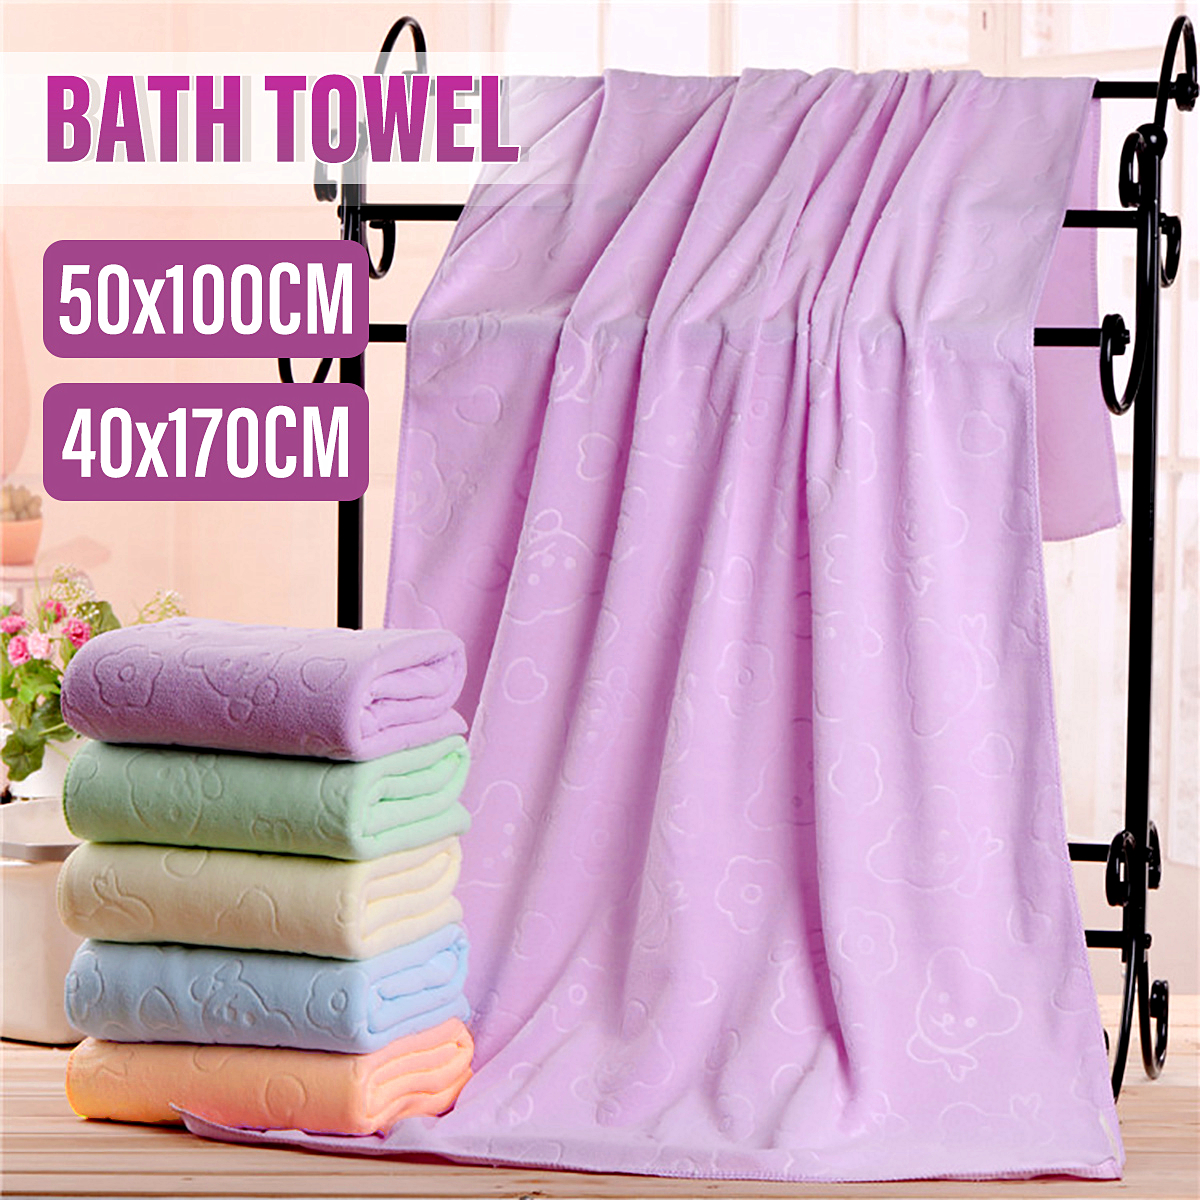 Microfiber-Towel-Bath-Towel-Gym-Sport-Footy-Travel-Camping-Swimming-Beach-Towel-1676923-1